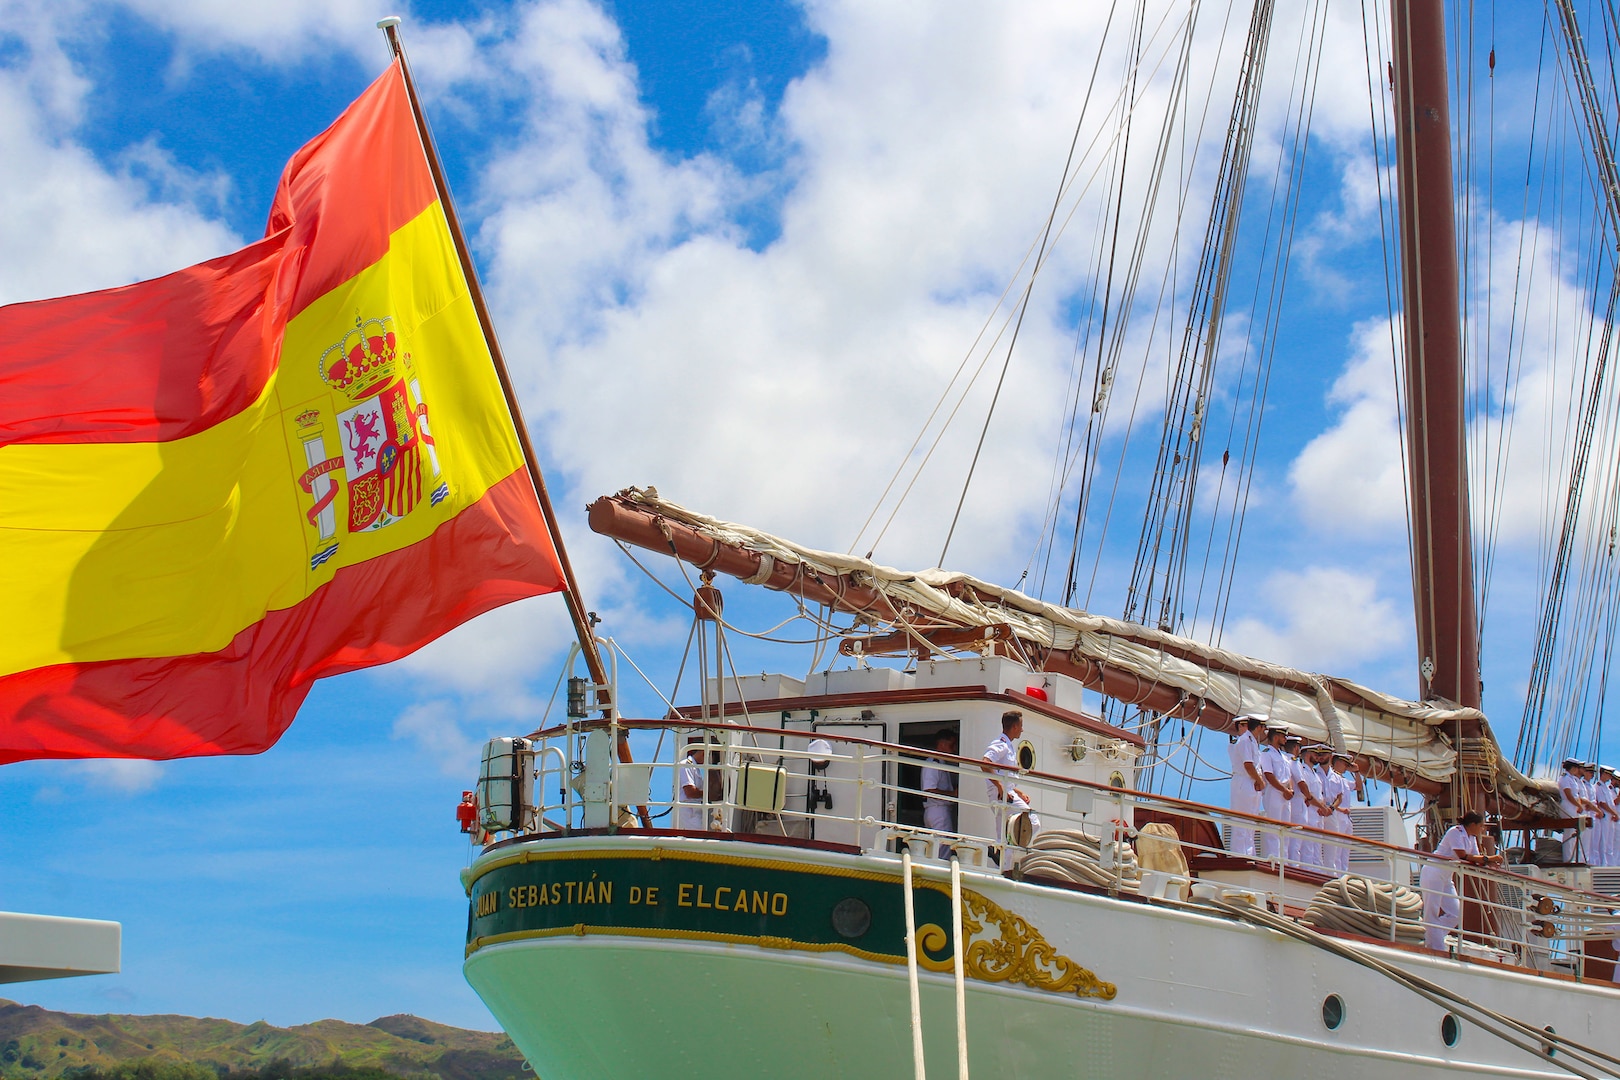 The Spanish Navy training ship Juan Sebastian De Elcano arrived at Apra Harbor